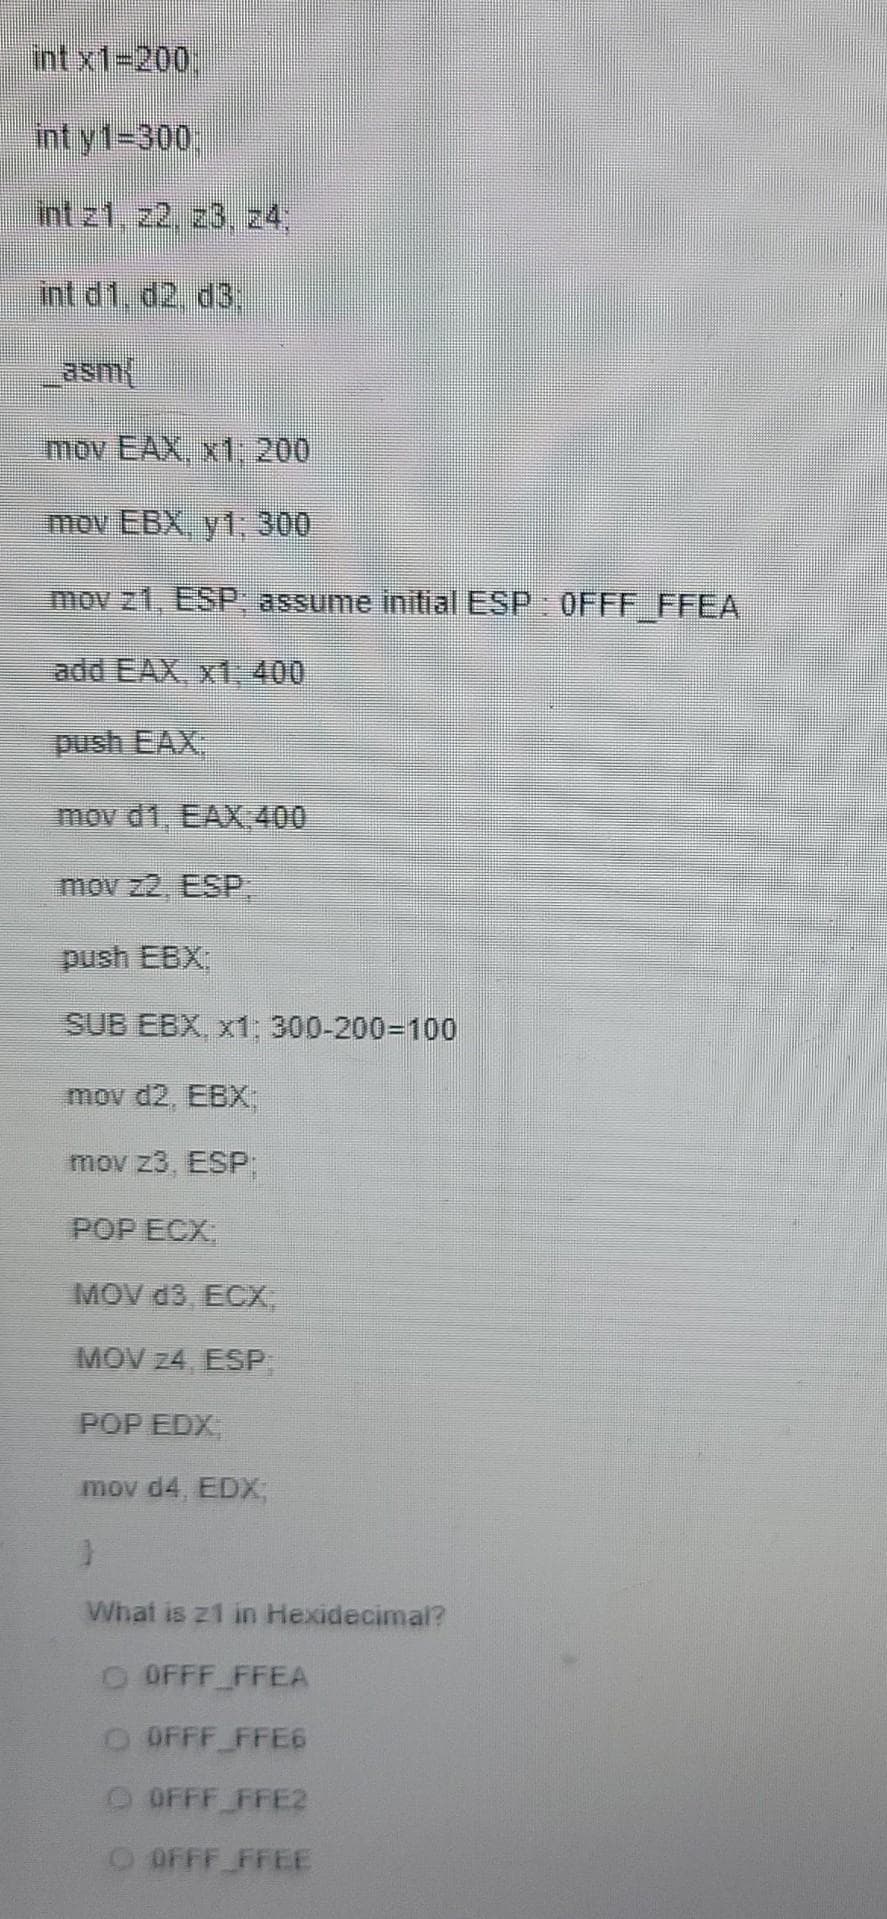 int x1-200%
int y1-300,
int z1, z2, z3, z4,
int d1. d2, d3,
asm
mov EAX, x1, 200
mov EBX, y1: 300
mov z1, ESP, assume initial ESP OFFF FFEA
add EAX, x1, 400
push EAX,
mov d1, EAX 400
mov z2, ESP:
push EBX:
SUB EBX, x1: 300-200=100
mov d2, EBX
mov z3, ESP:
POP ECX,
MOV d3, ECX,
MOV z4, ESP,
POP EDX,
mov d4, EDX,
What is z1 in Hexidecimal?
O OFFF FFEA
O OFFF FFE6
O OFFF FFE2
O OFFF FFEE
